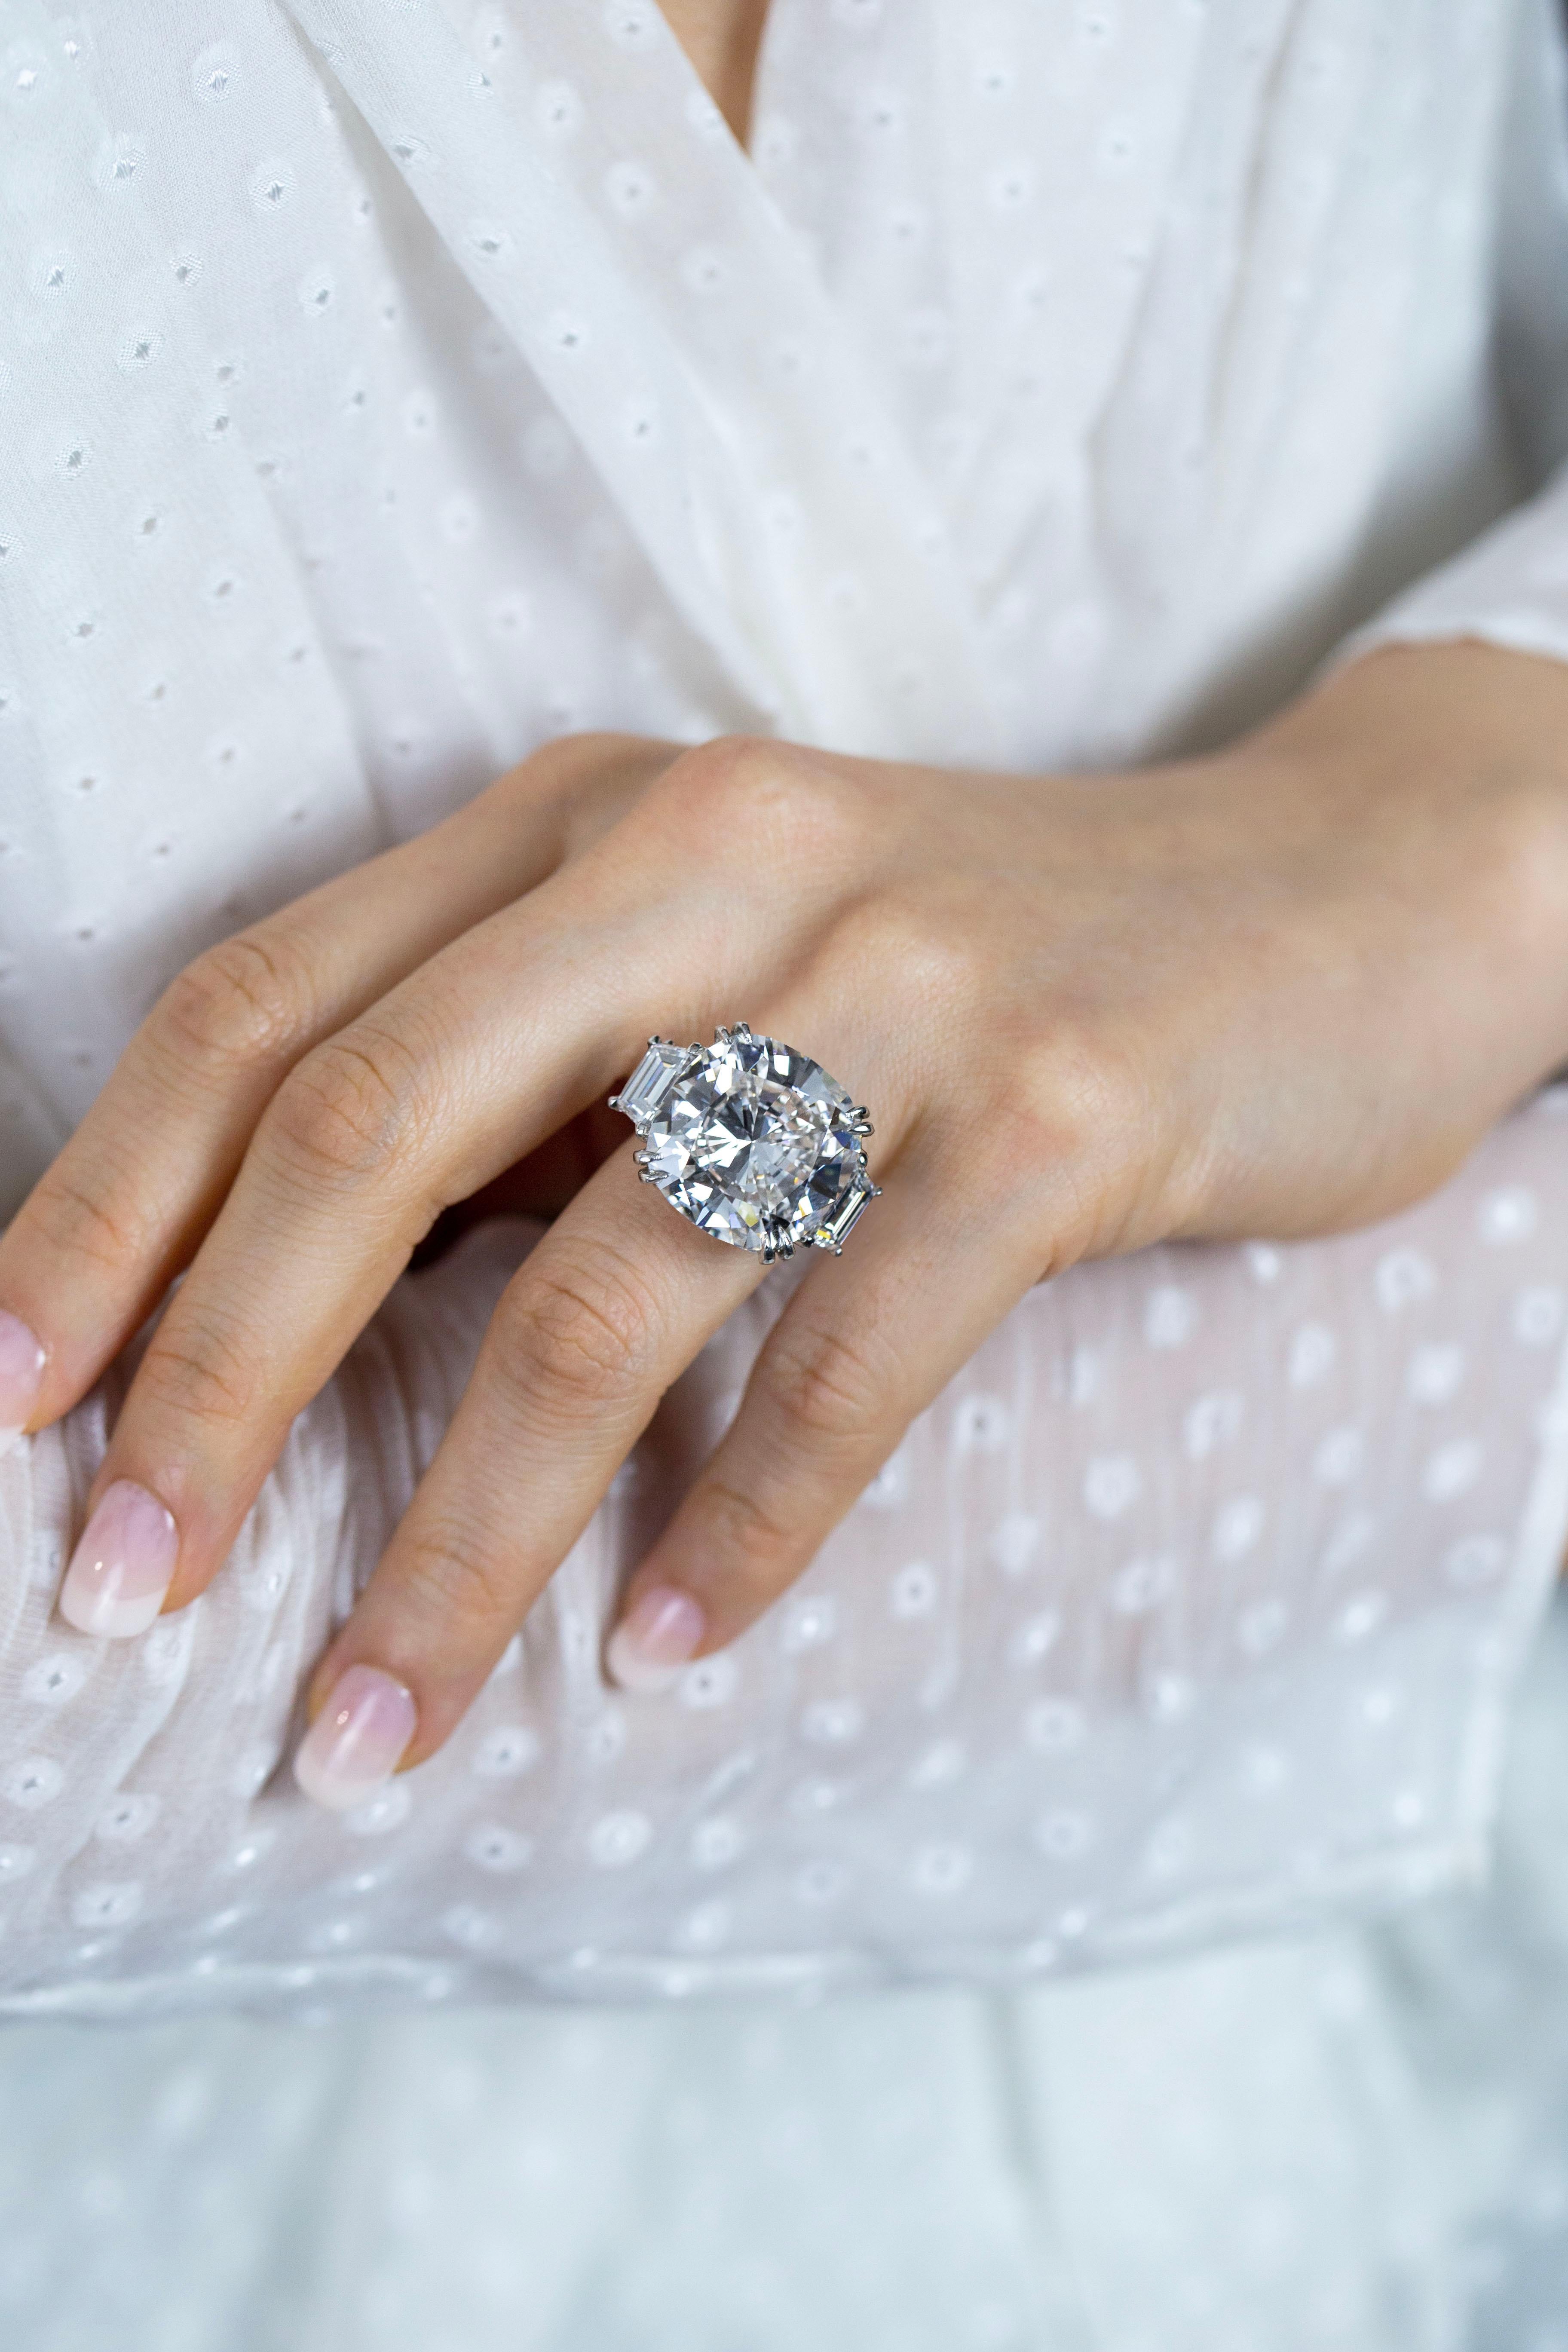 22 carat diamond engagement ring